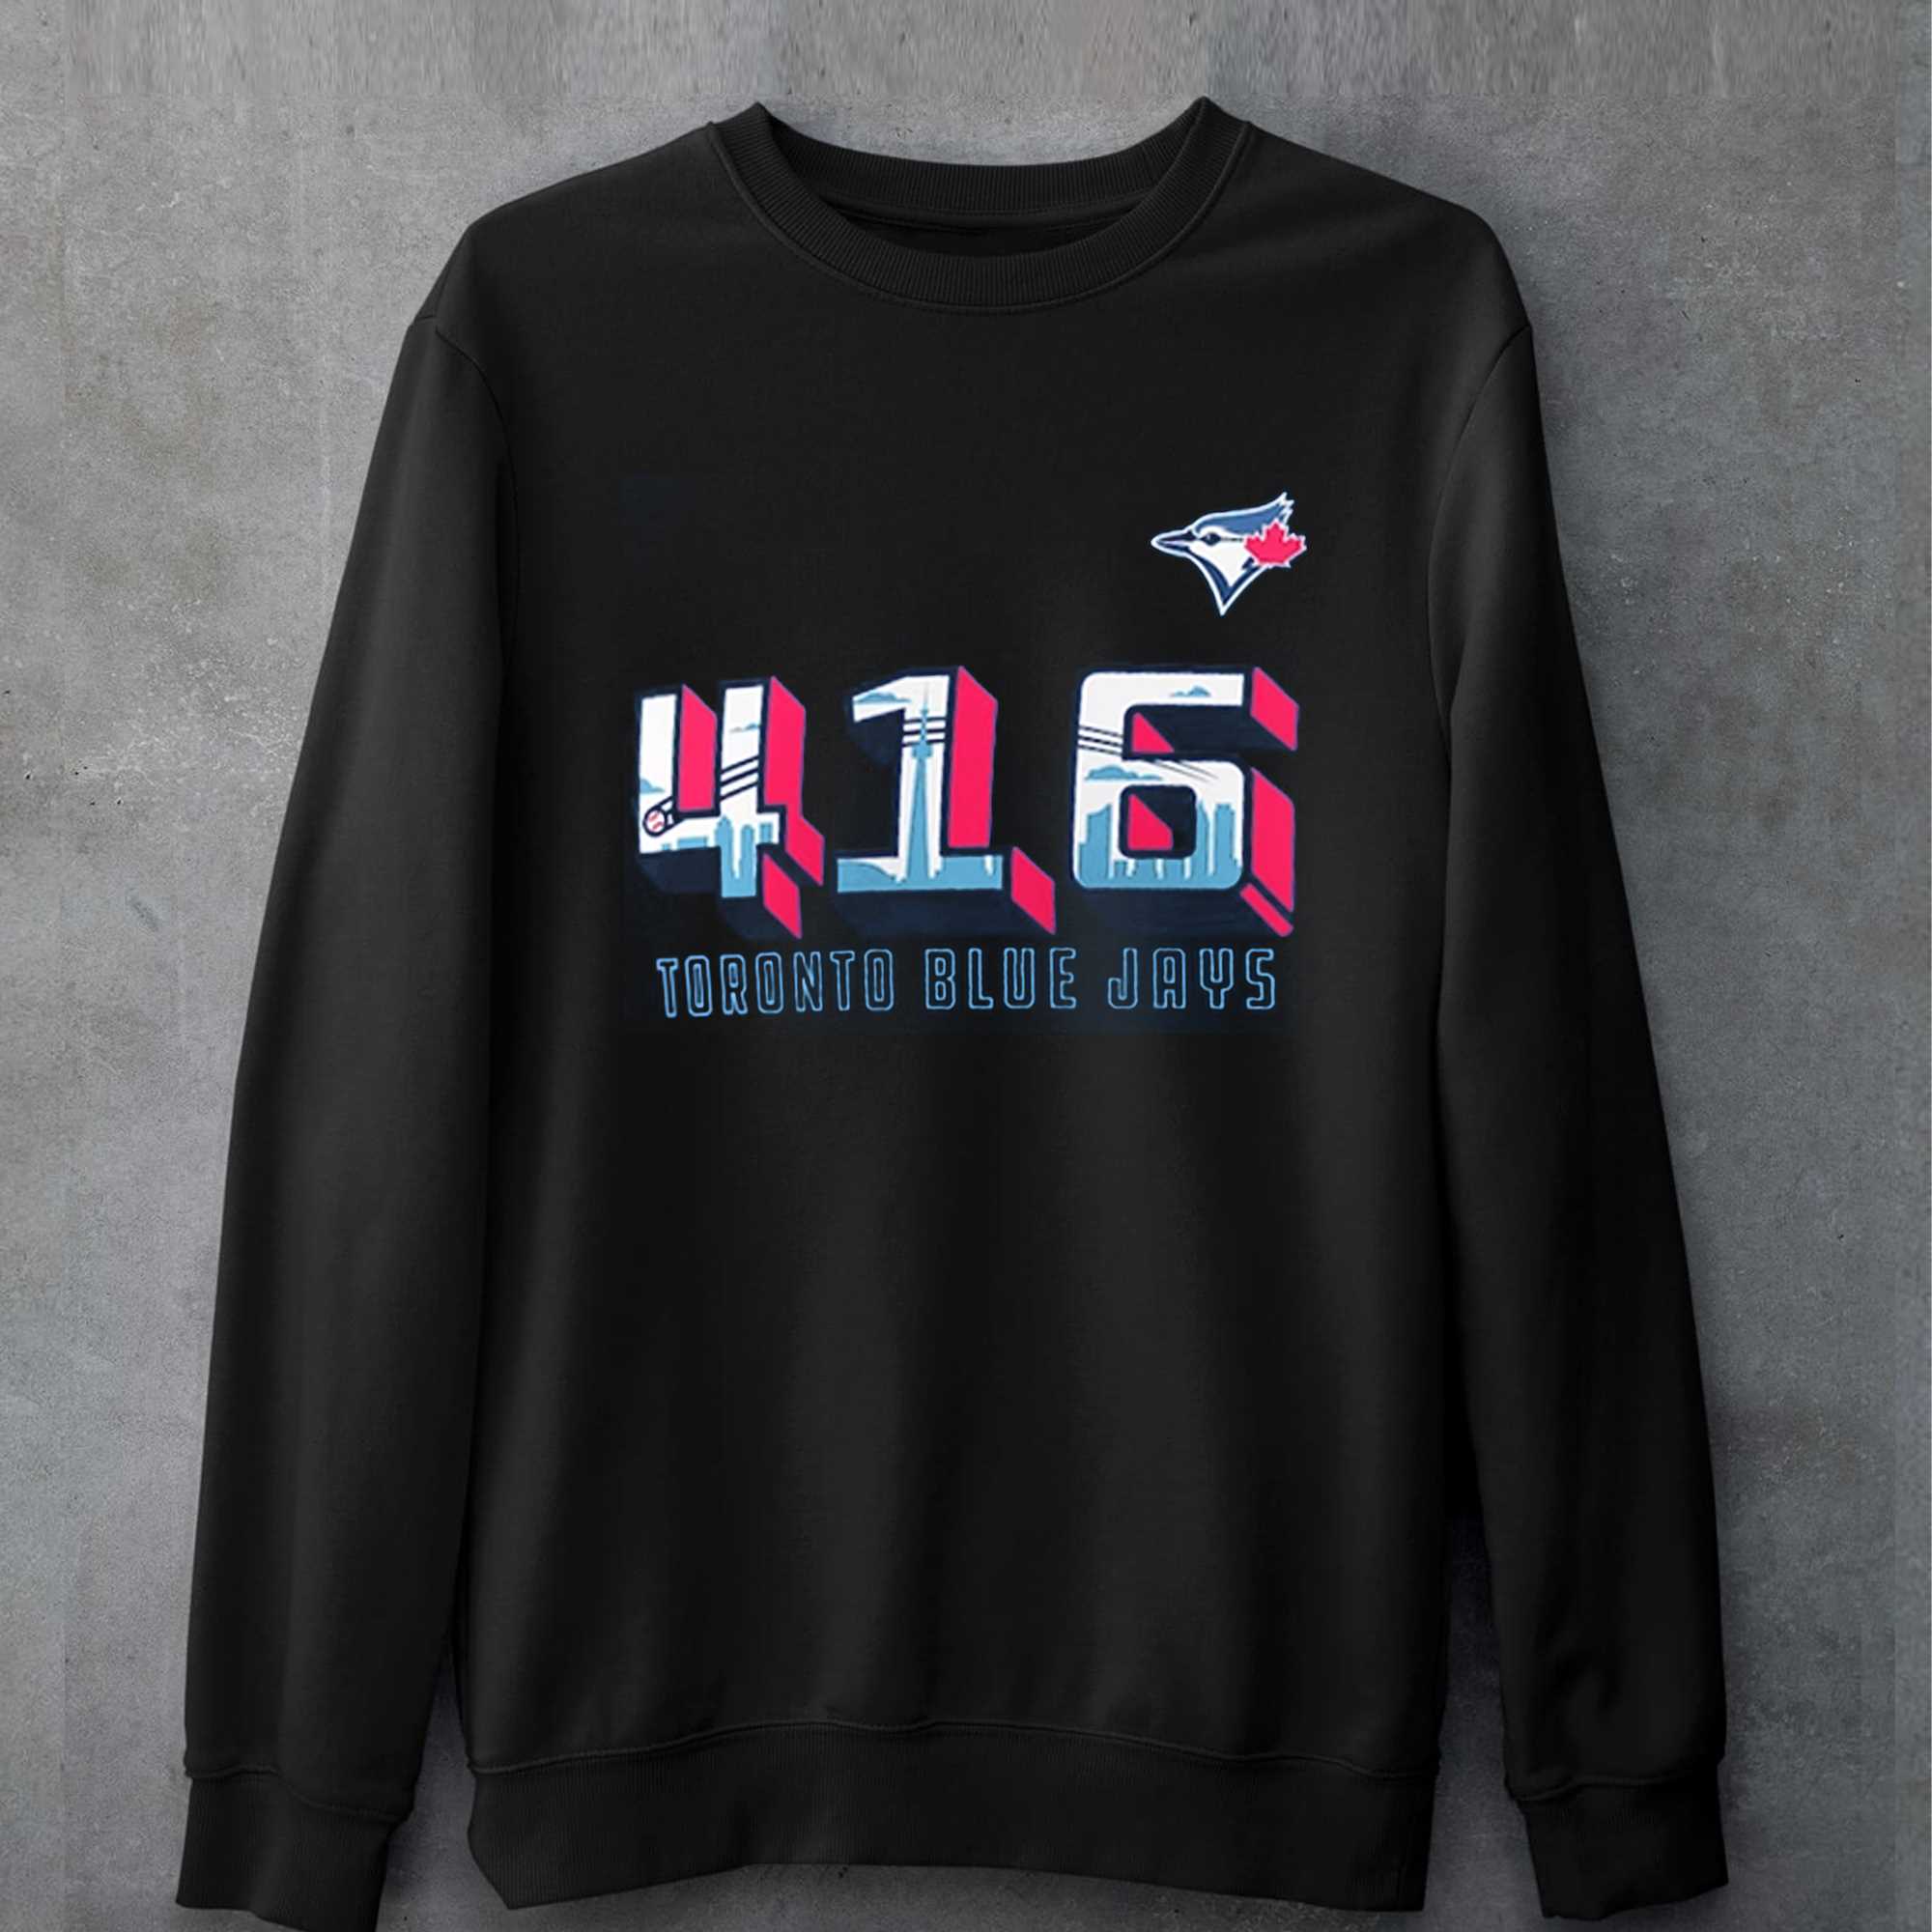 Toronto Blue Jays Fanatics Branded Hometown In The 416 T-shirt